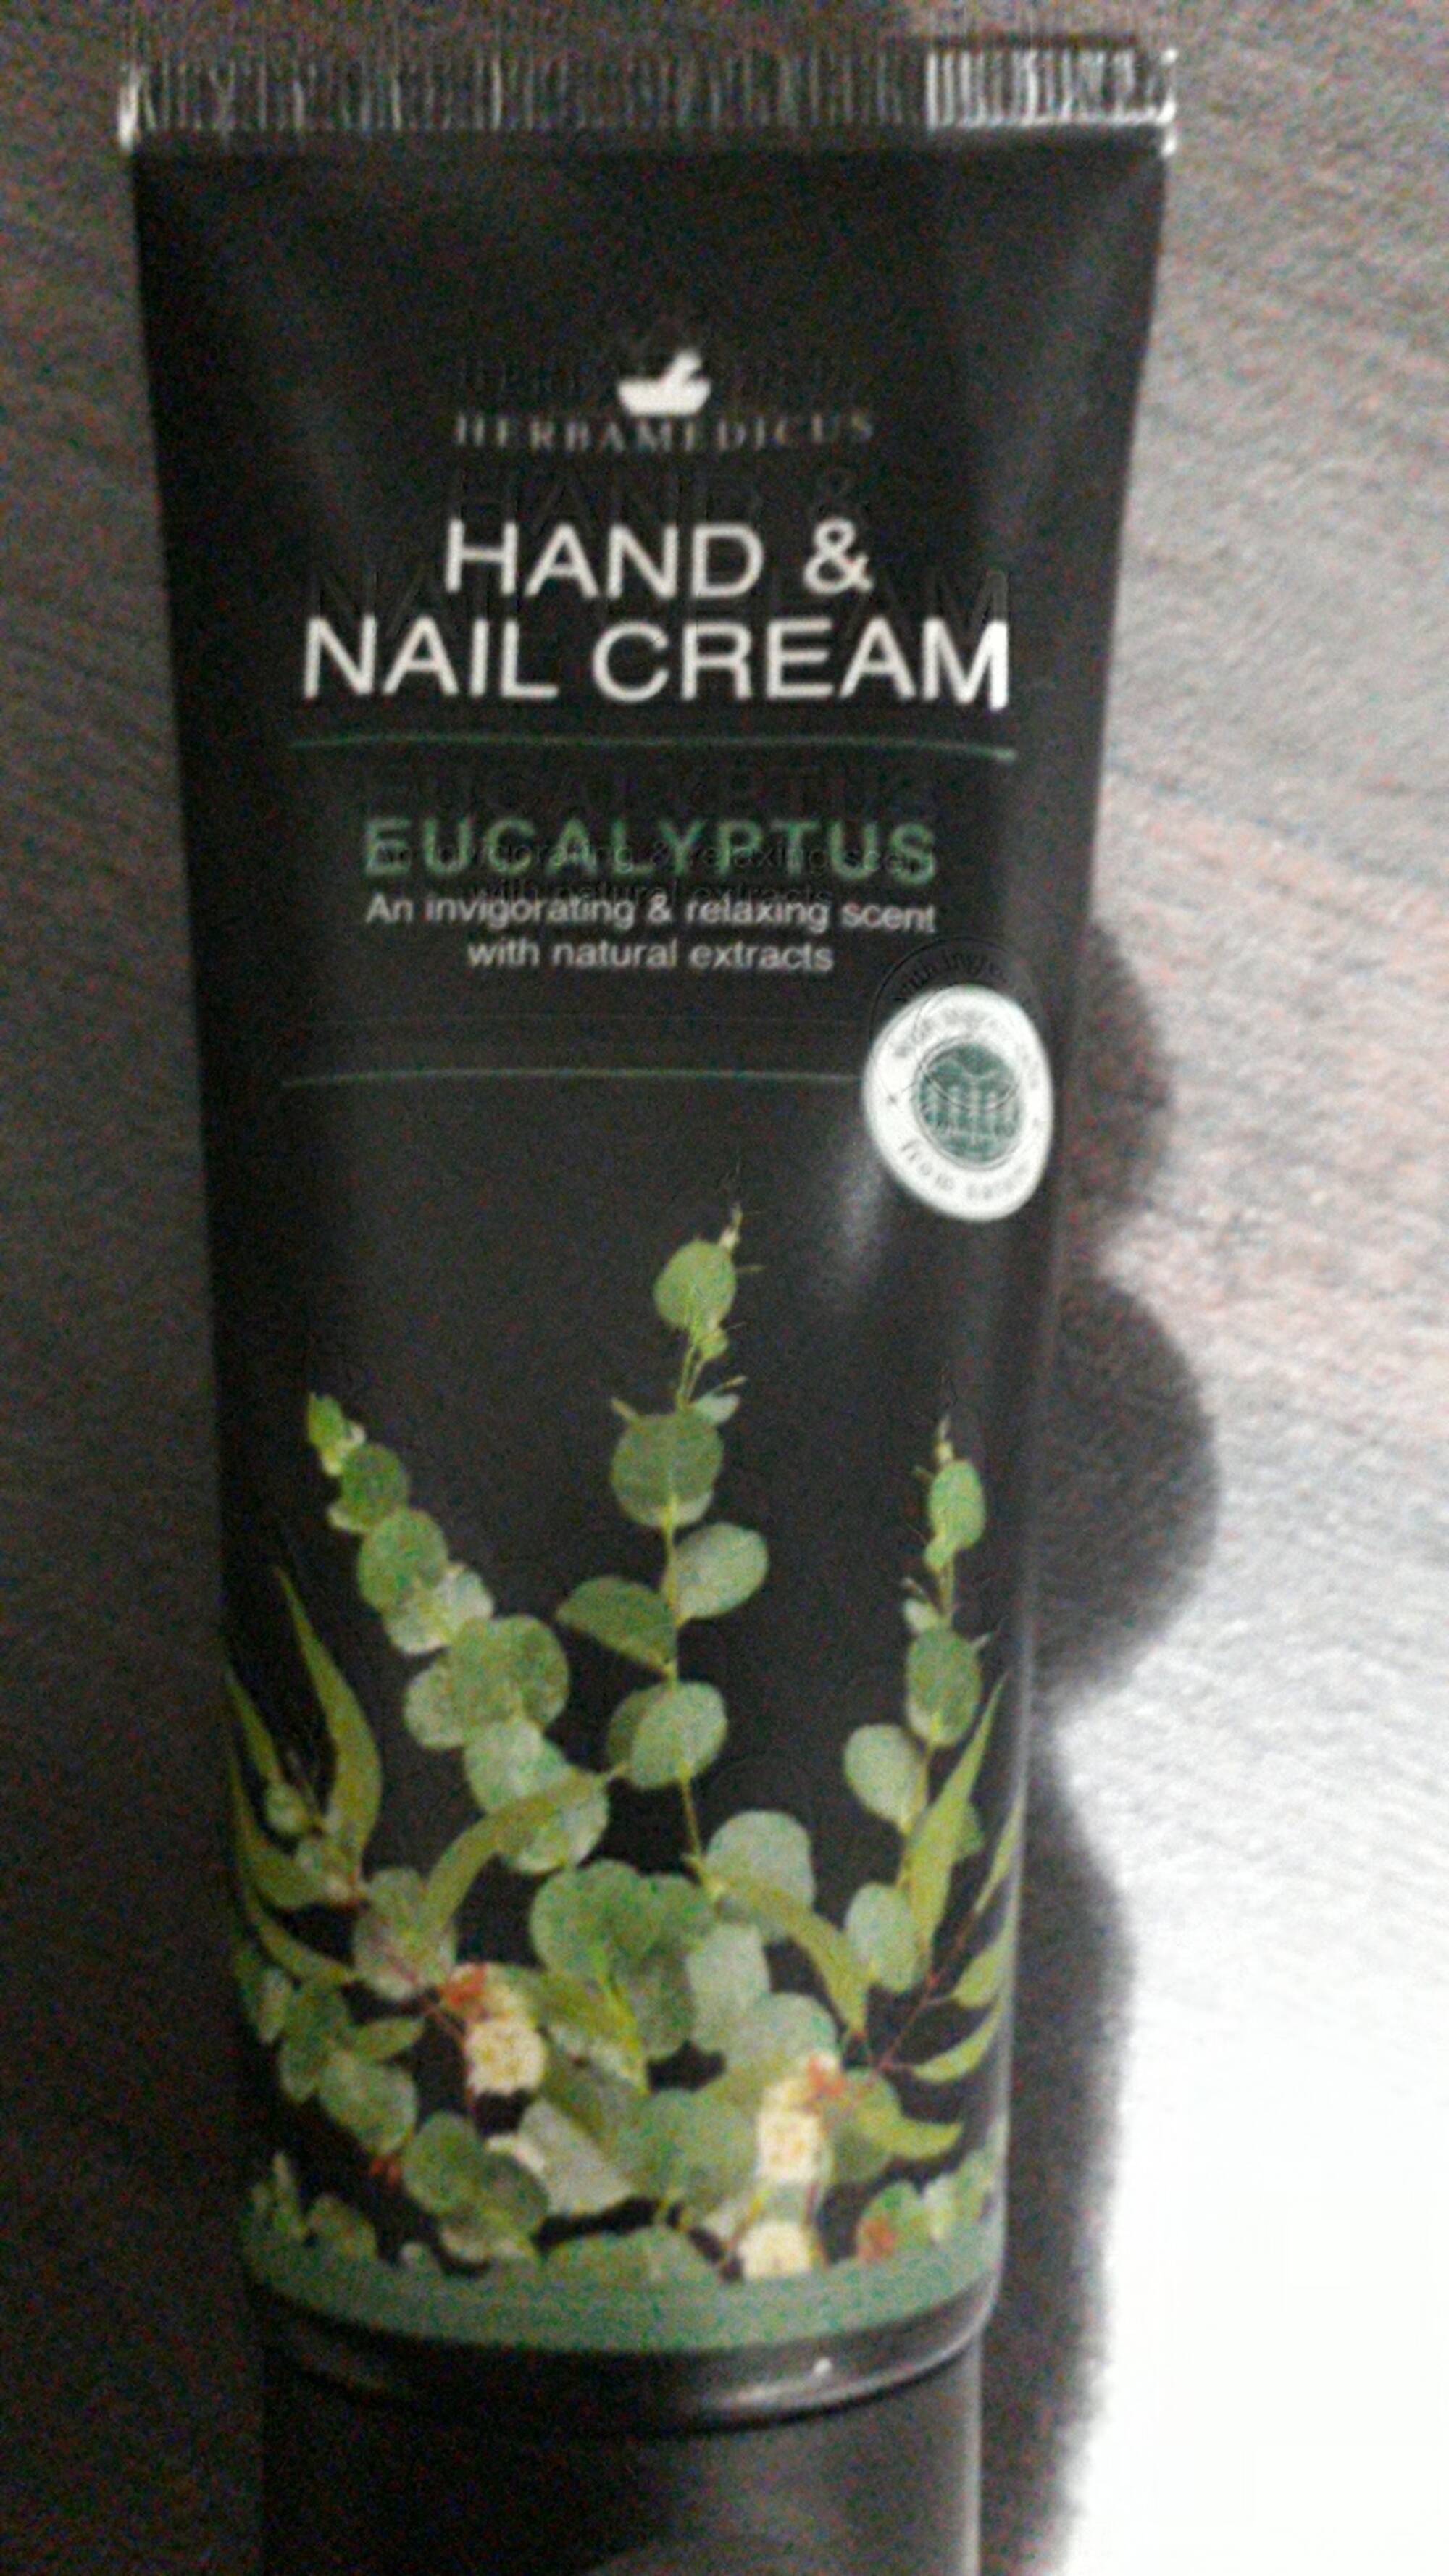 HERBAMEDICUS - Eucalyptus - Hand & nail cream